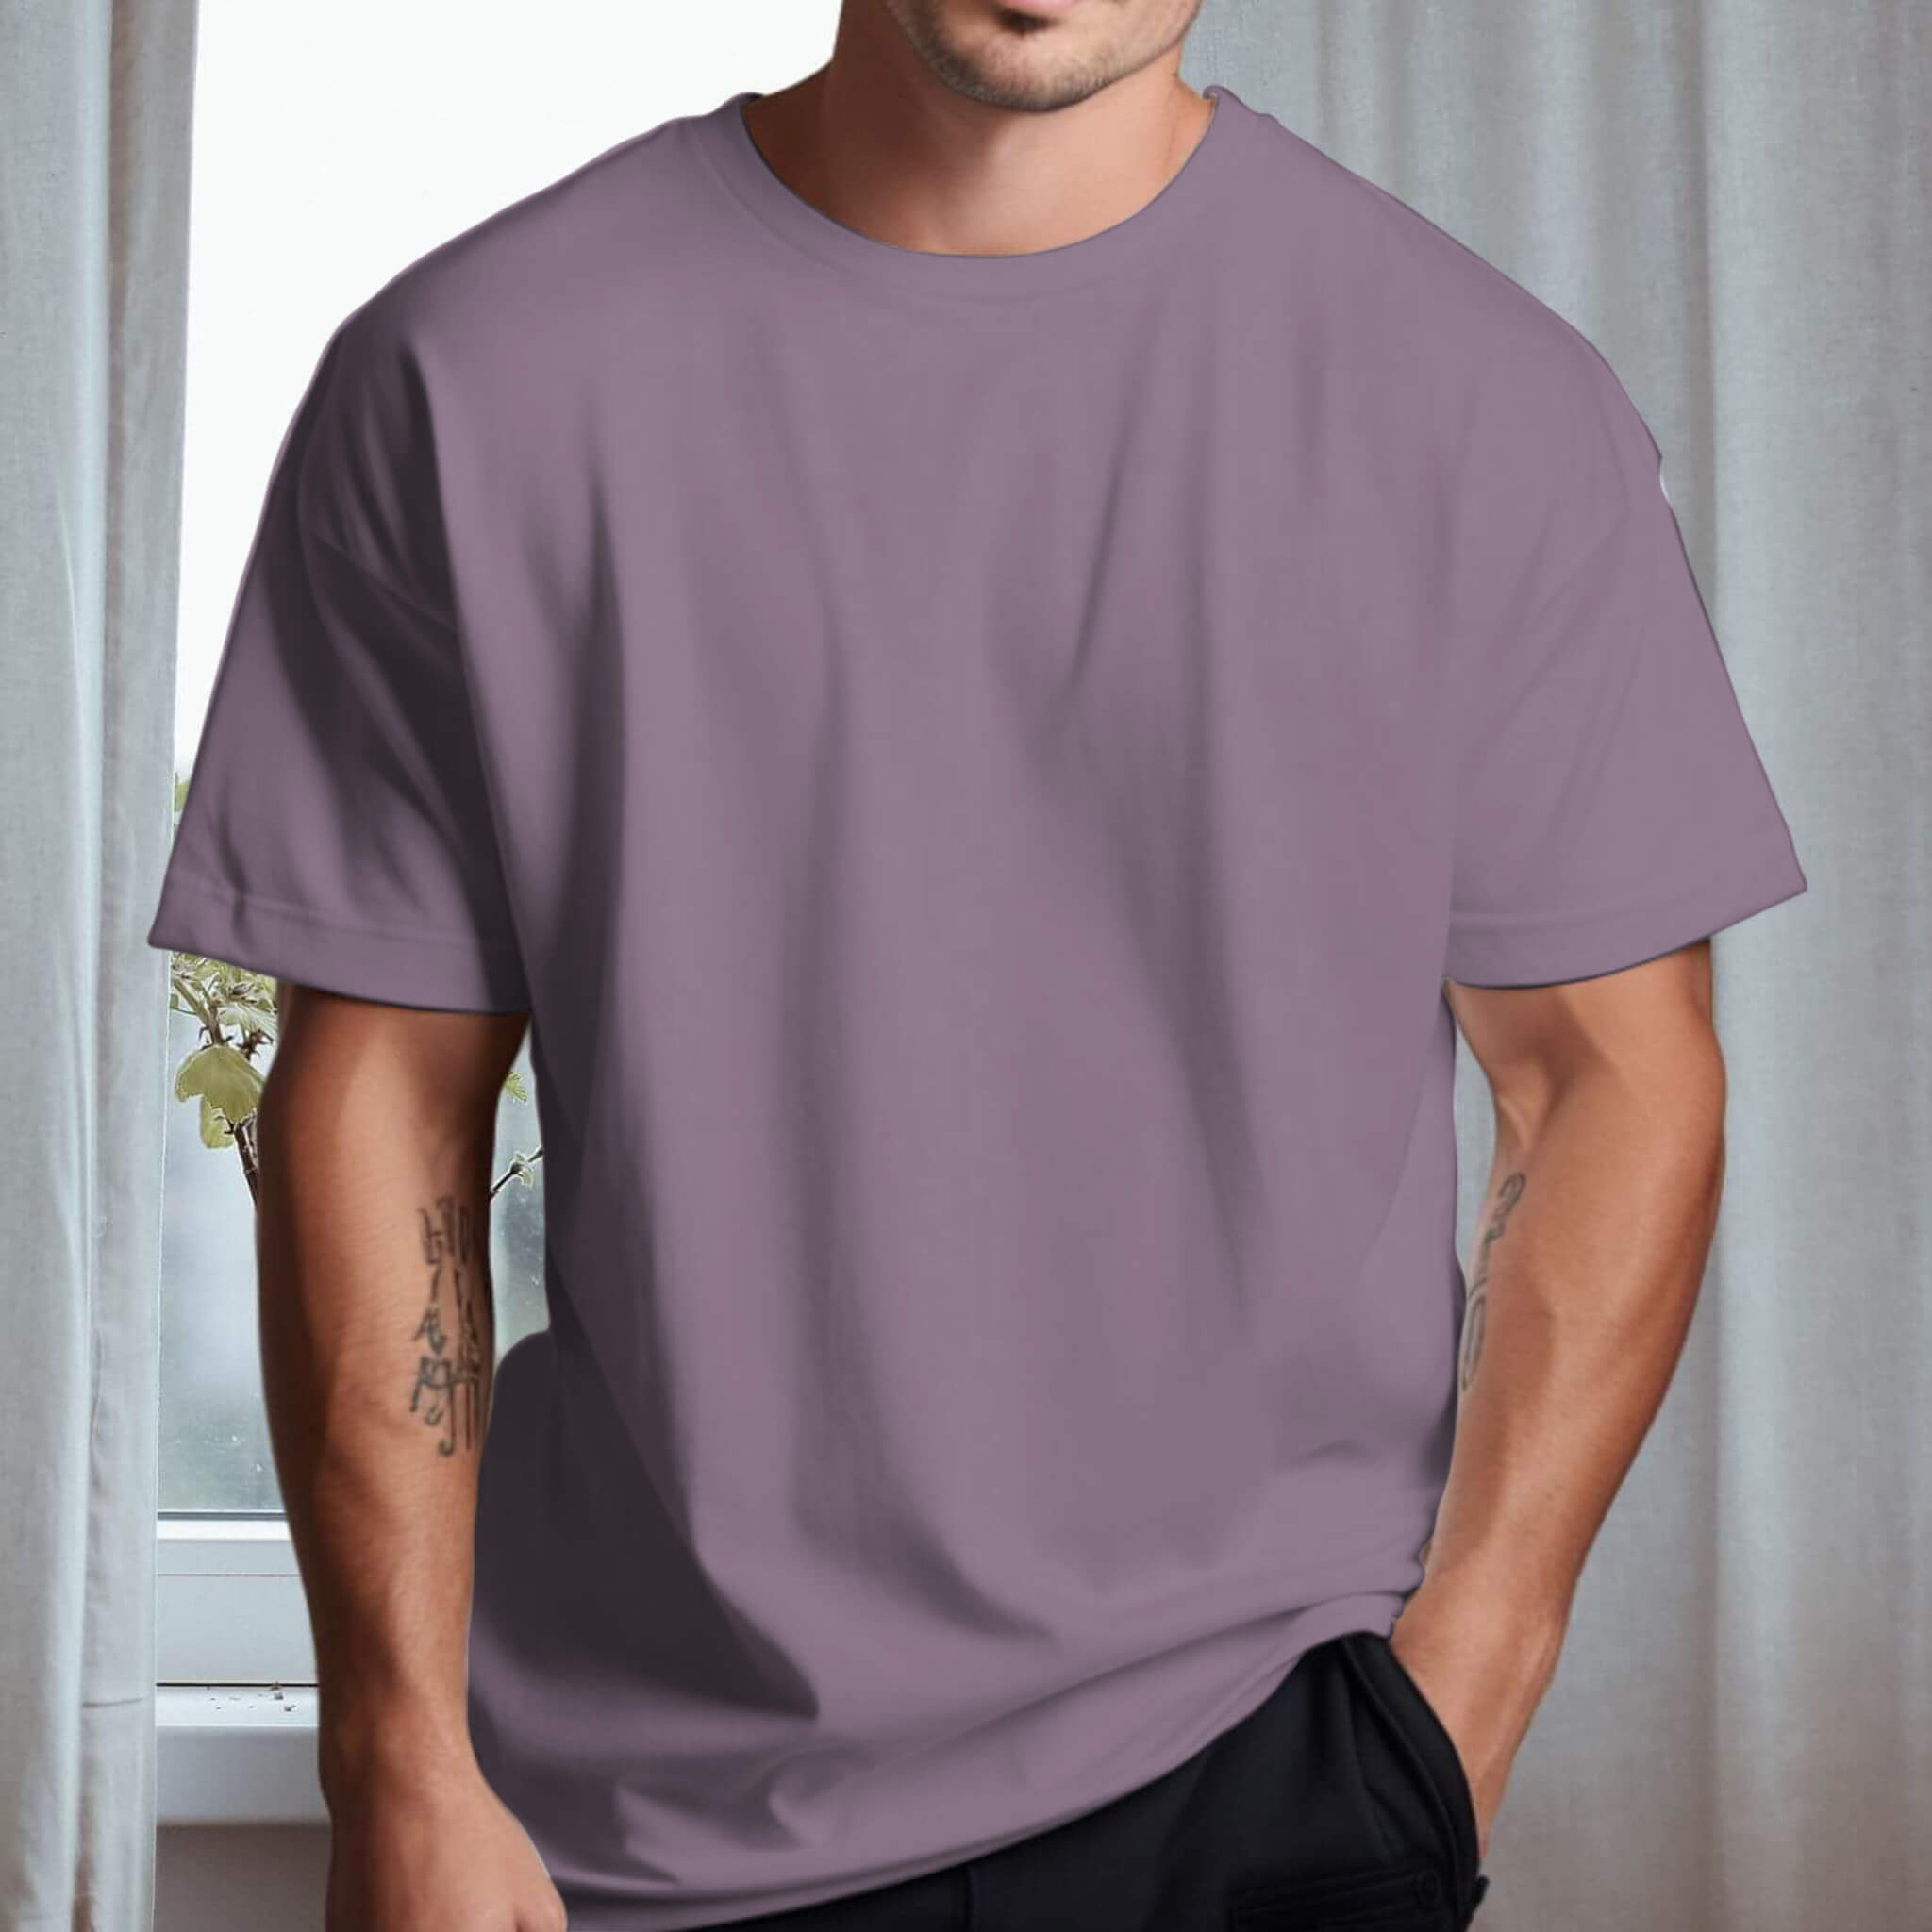 Men's Loose Fit Drop-Shoulder Tee  UponBasics Purple XS 